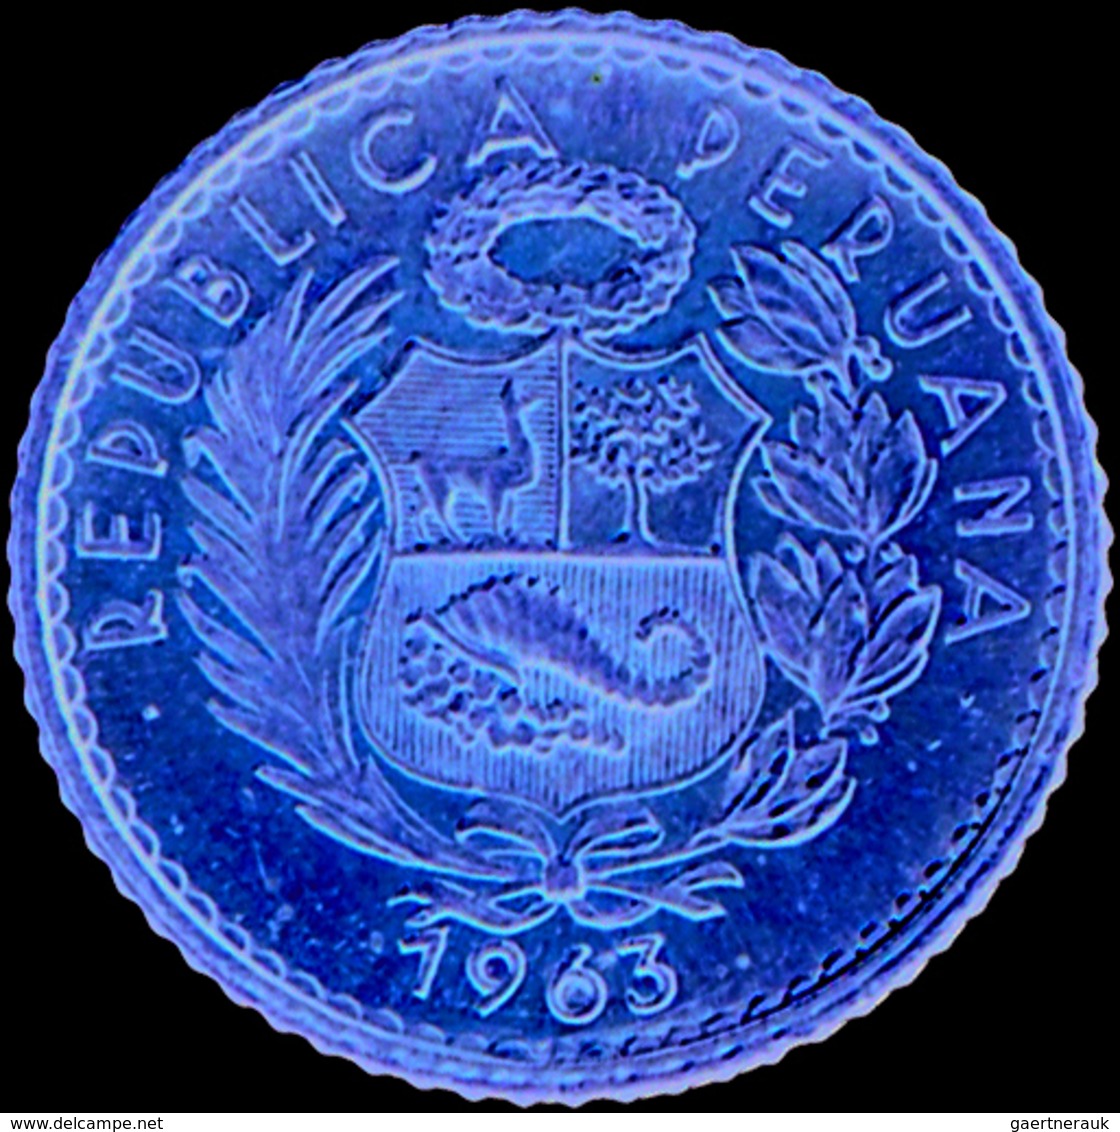 Peru - Anlagegold: Lot 5 Goldmünzen: 5 Soles 1963, KM # 235, Friedberg 82, stempelglanz / 10 Soles 1